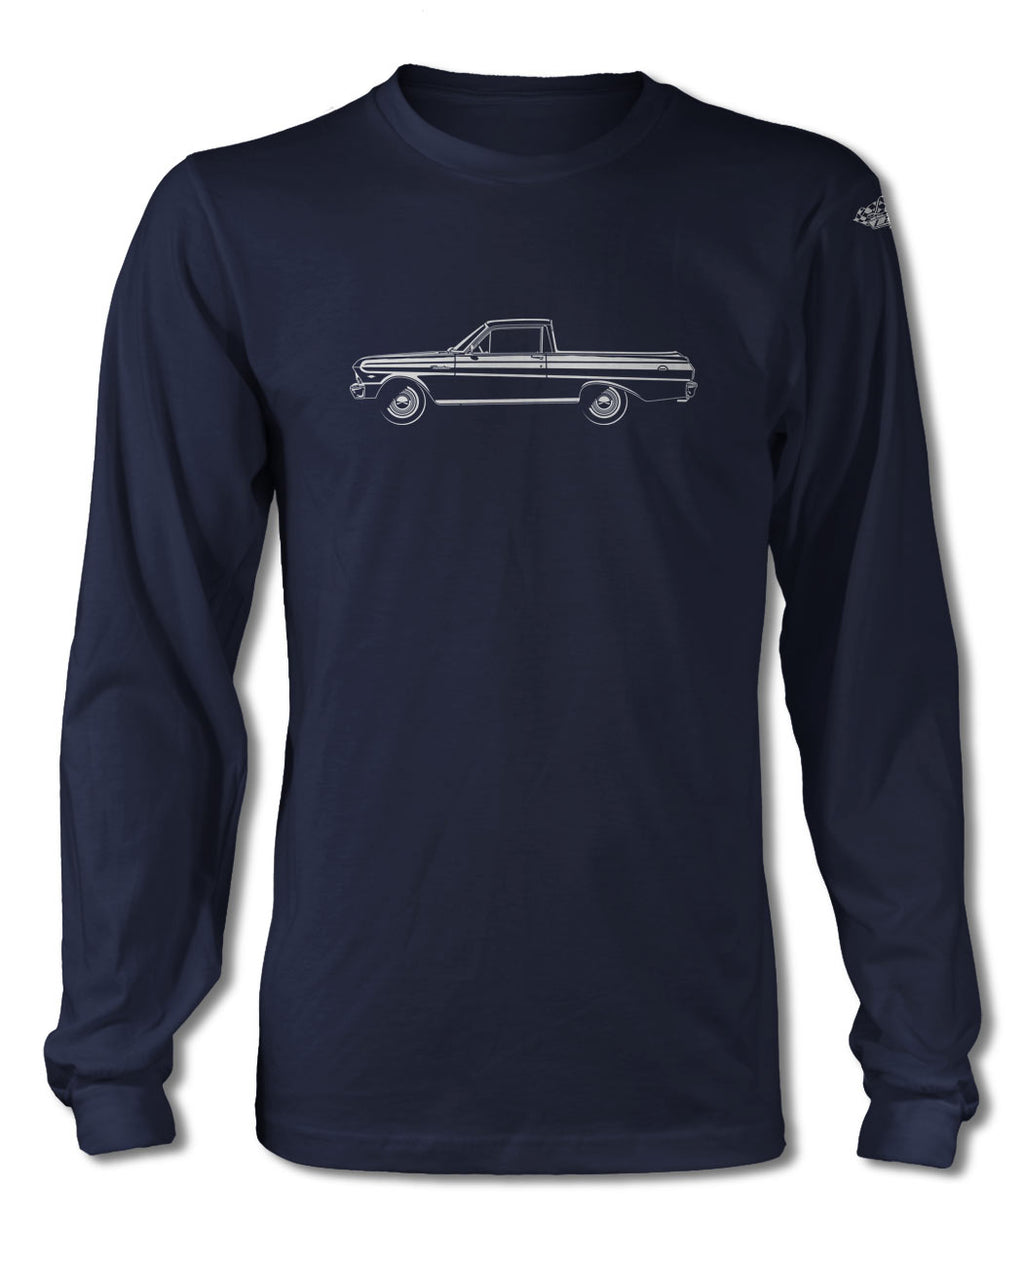 1964 Ford Ranchero T-Shirt - Long Sleeves - Side View